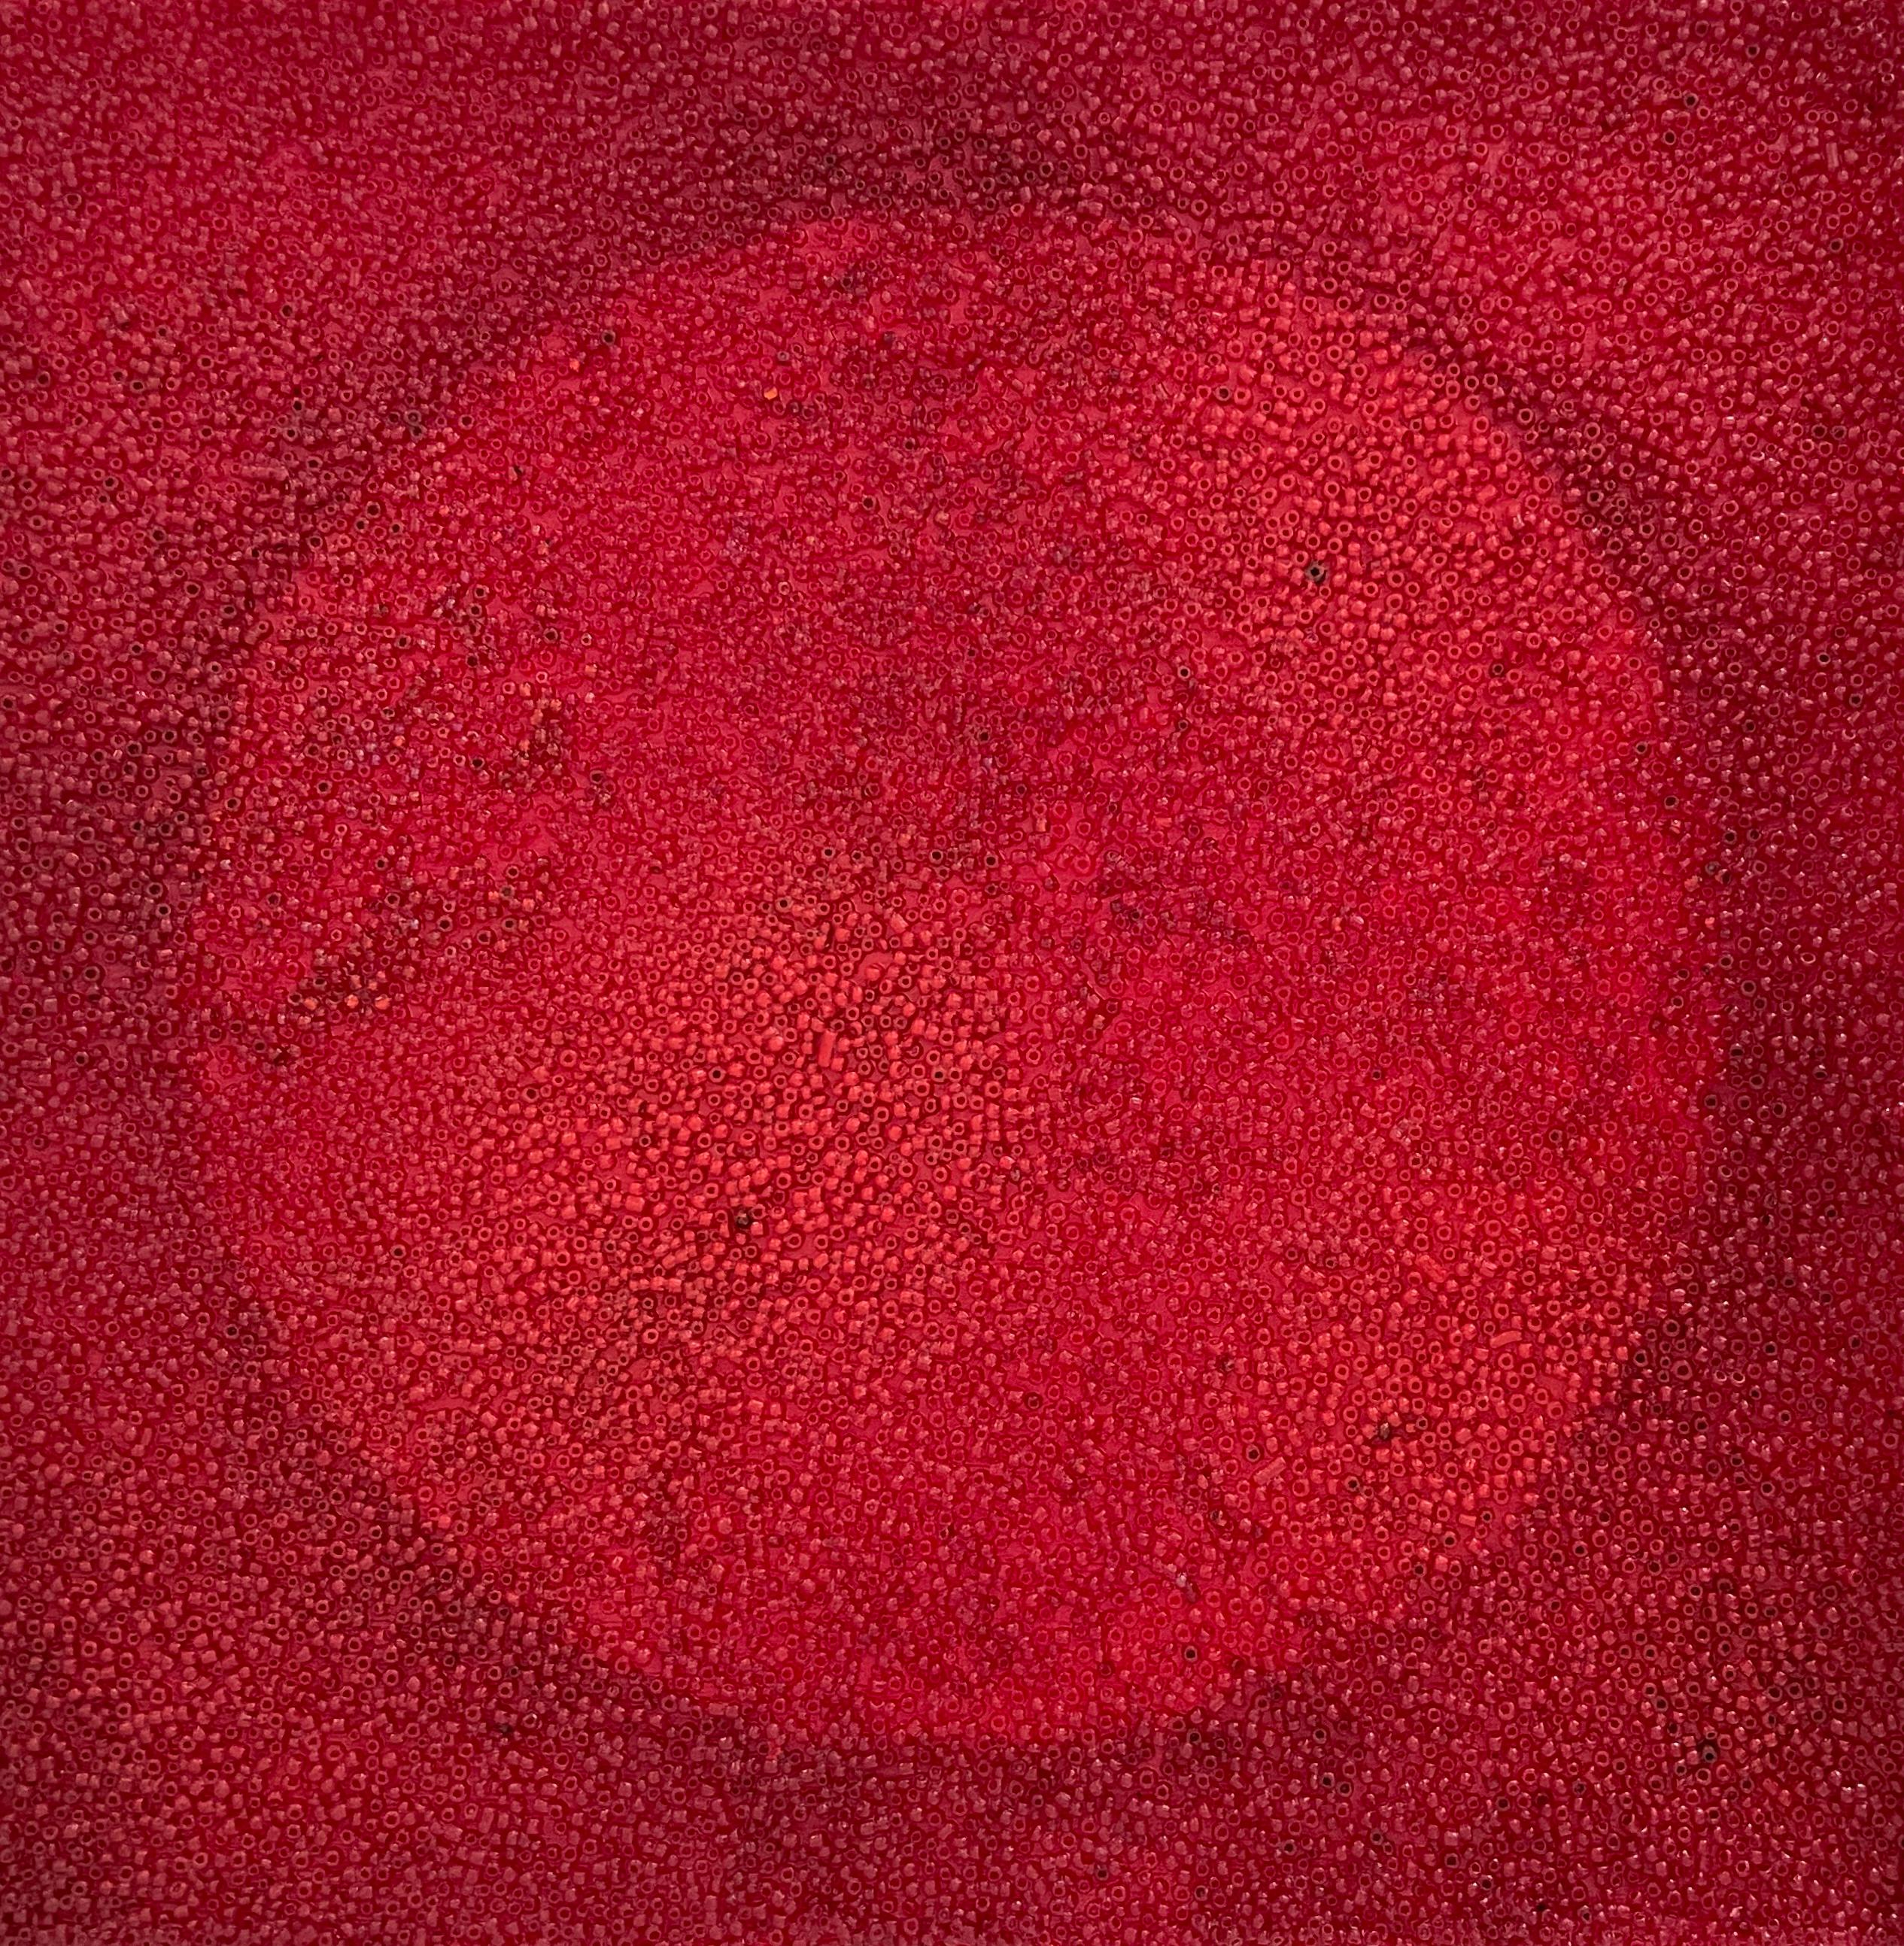 Tantra 48: minimalistische abstrakte spirituelle Mandala-Skulptur, rote Kreise